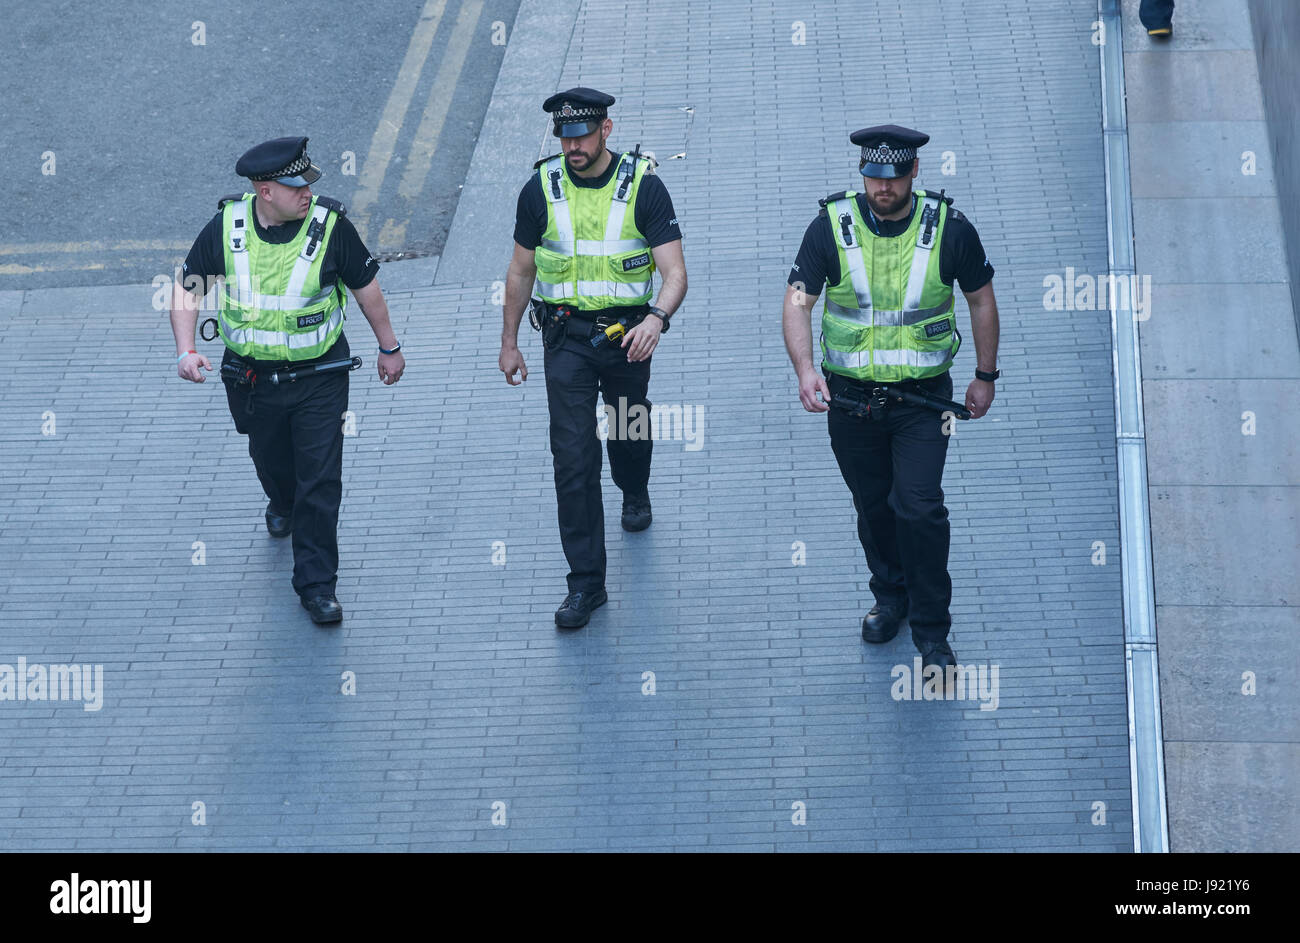 london policemen Stock Photo